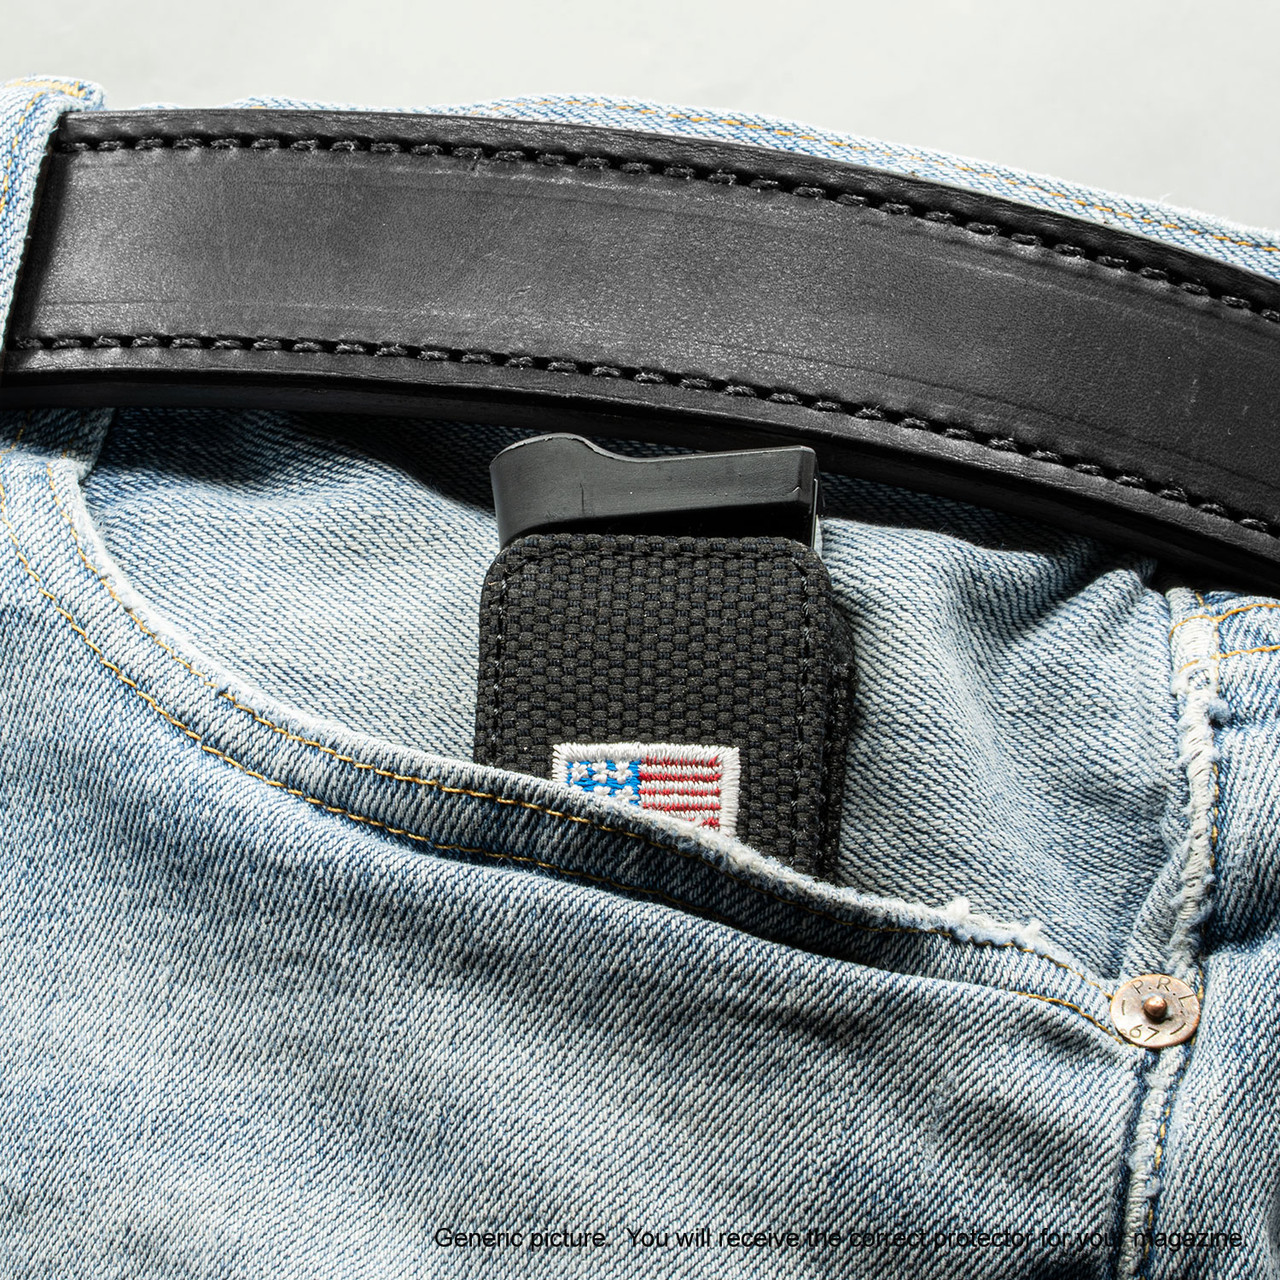 Beretta APX Black Flag Magazine Pocket Protector